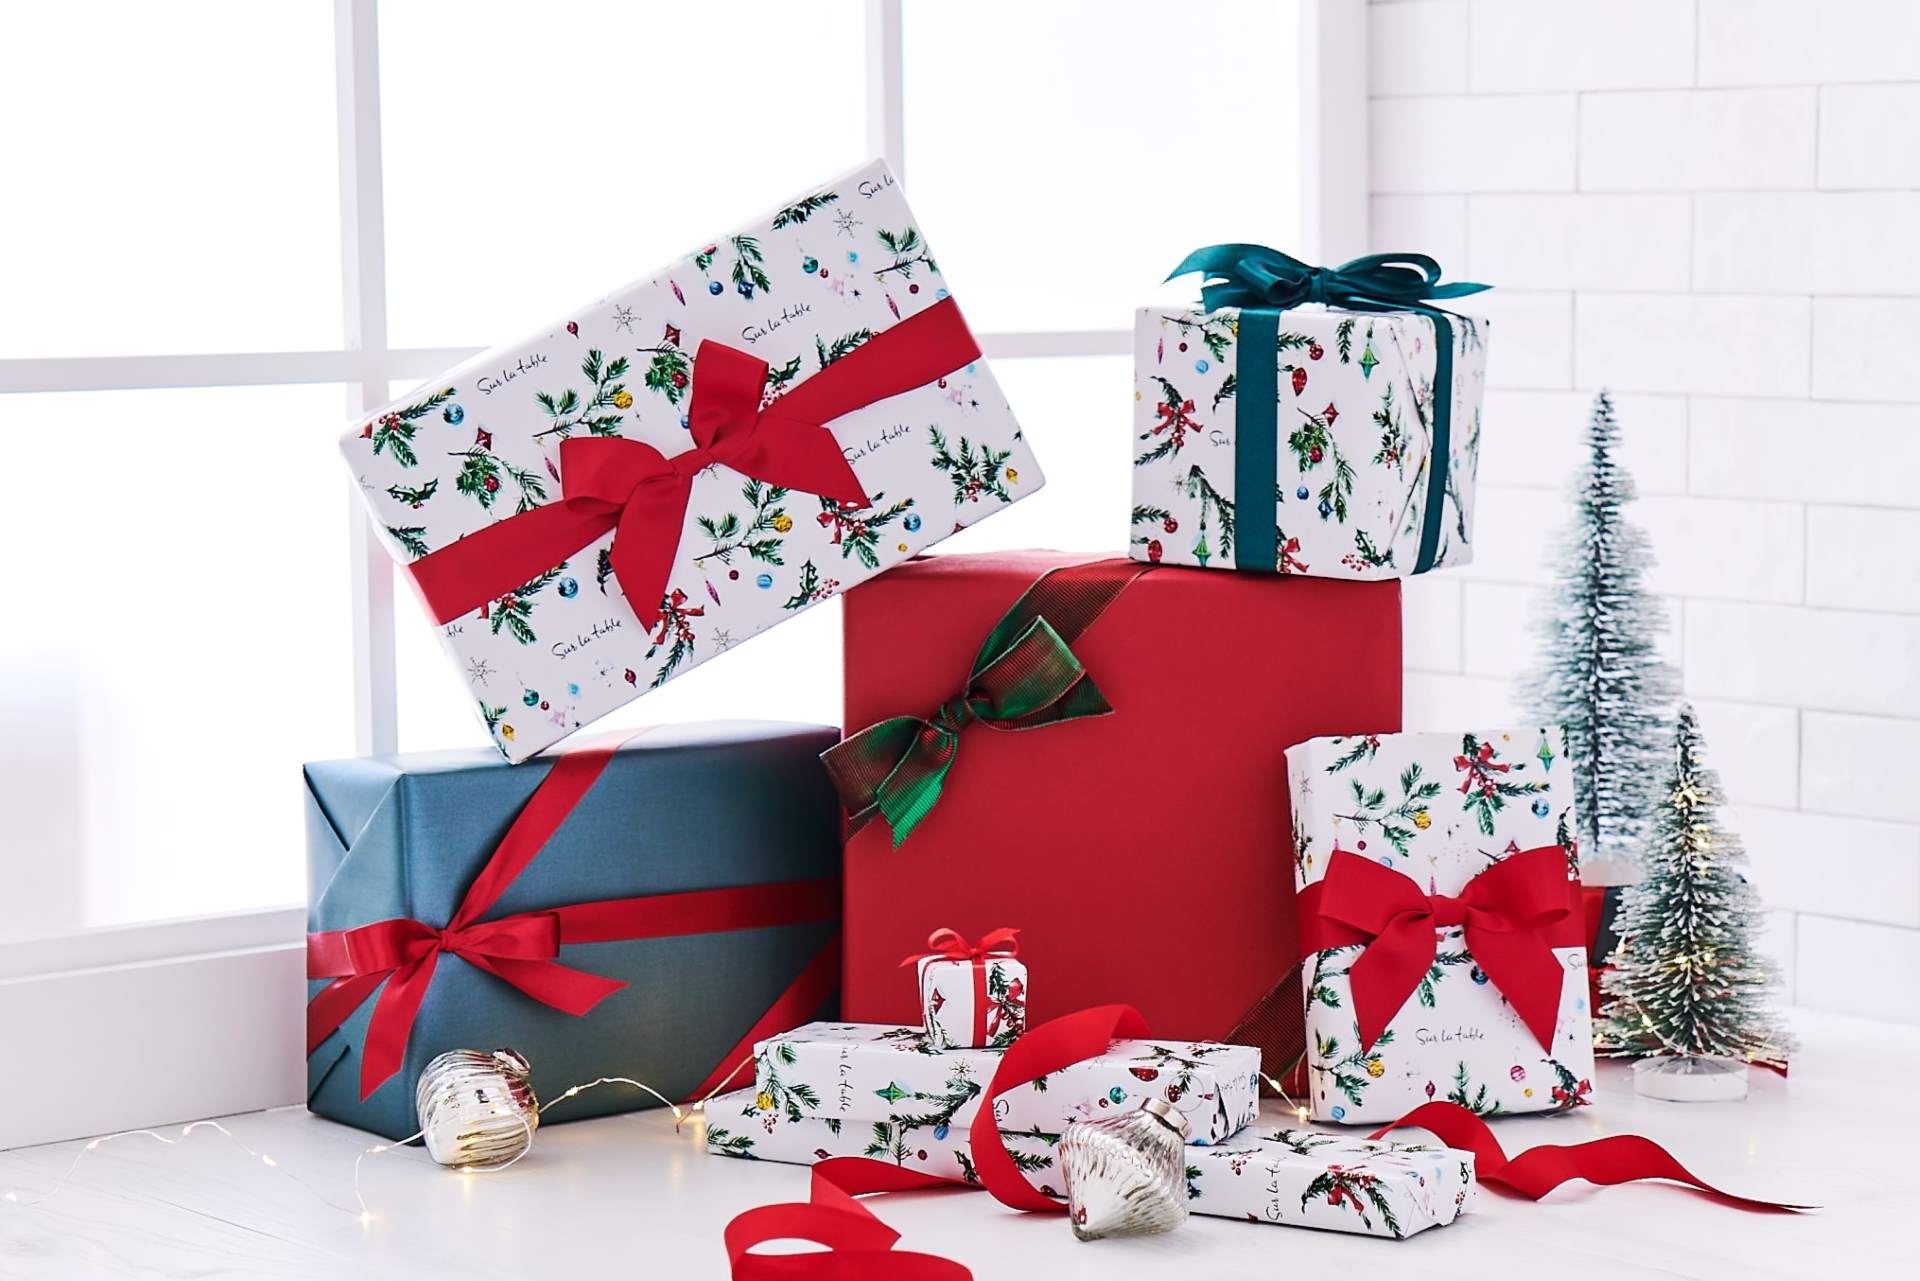 host gift ideas, christmas gift ideas